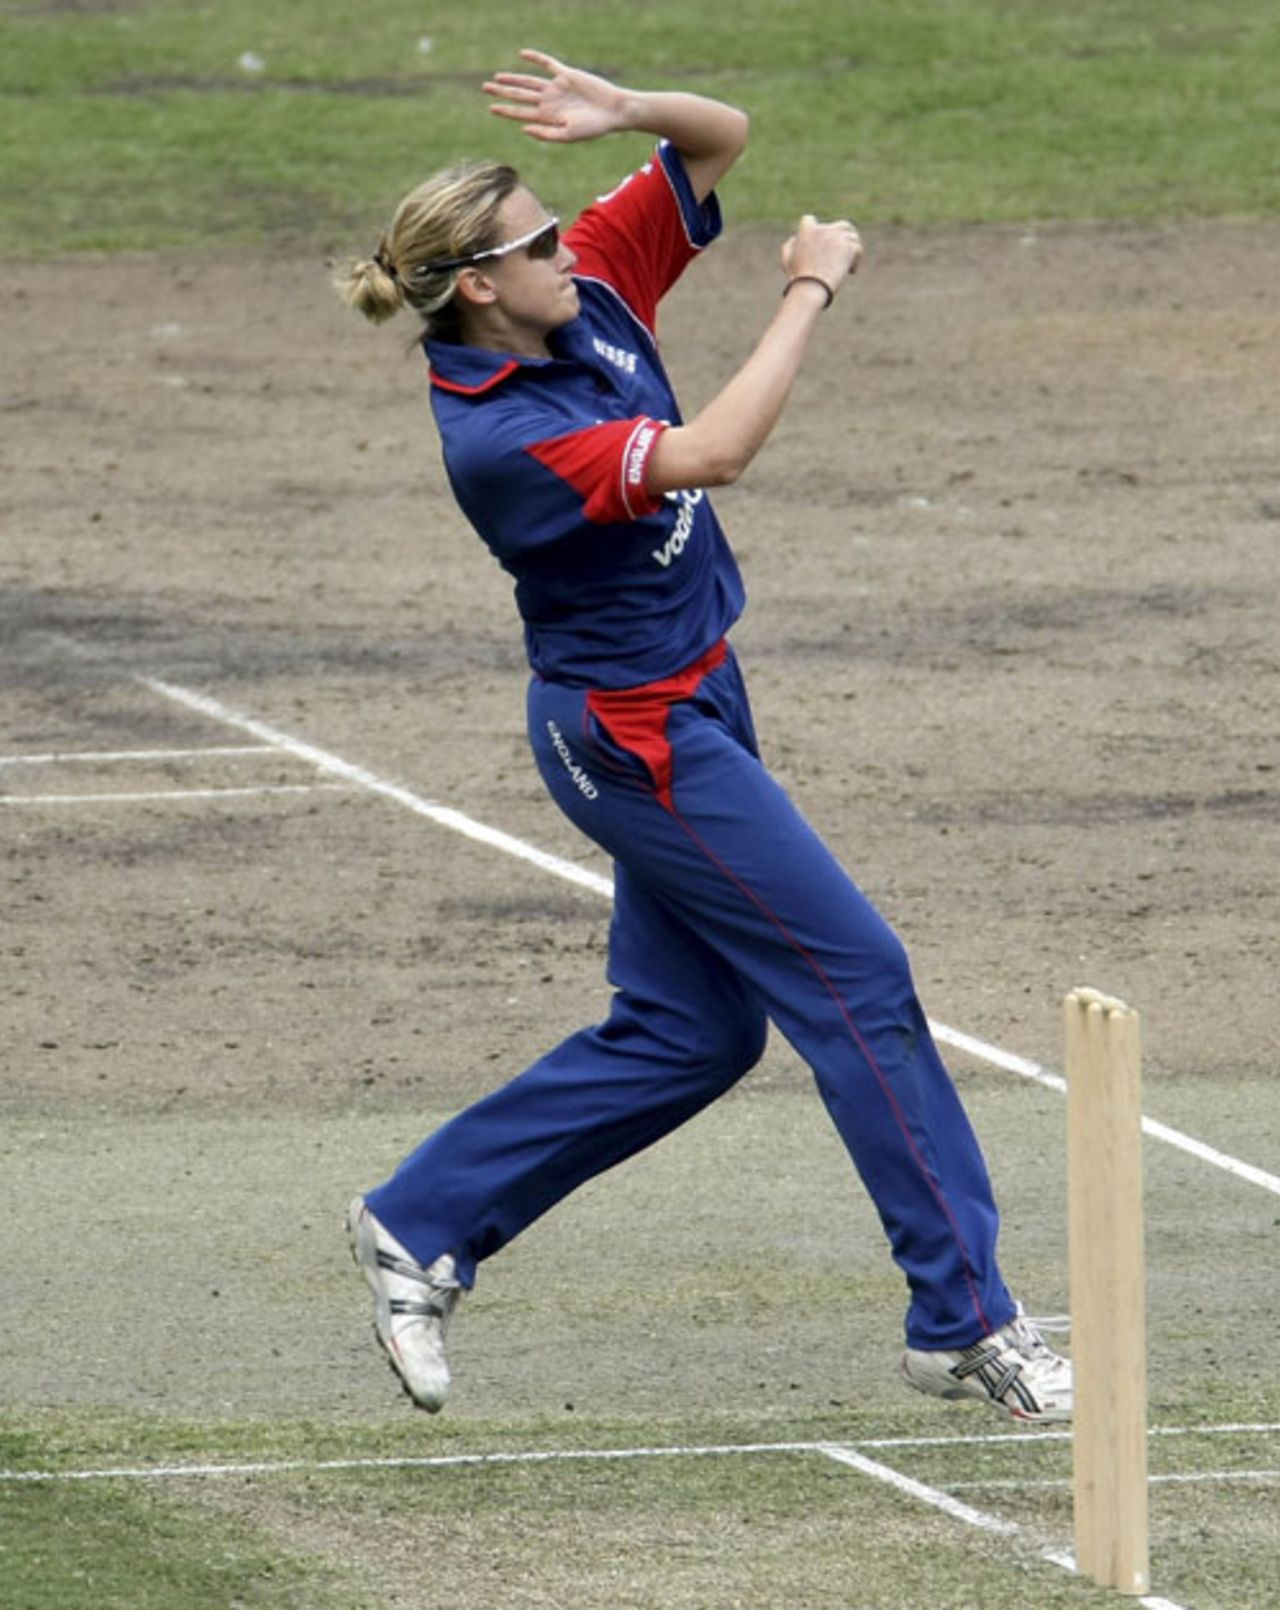 Rosalie Birch claimed a brace of wickets with her offspin, Australia Women v England Women, 1st ODI, Melbourne, February 3, 2008 